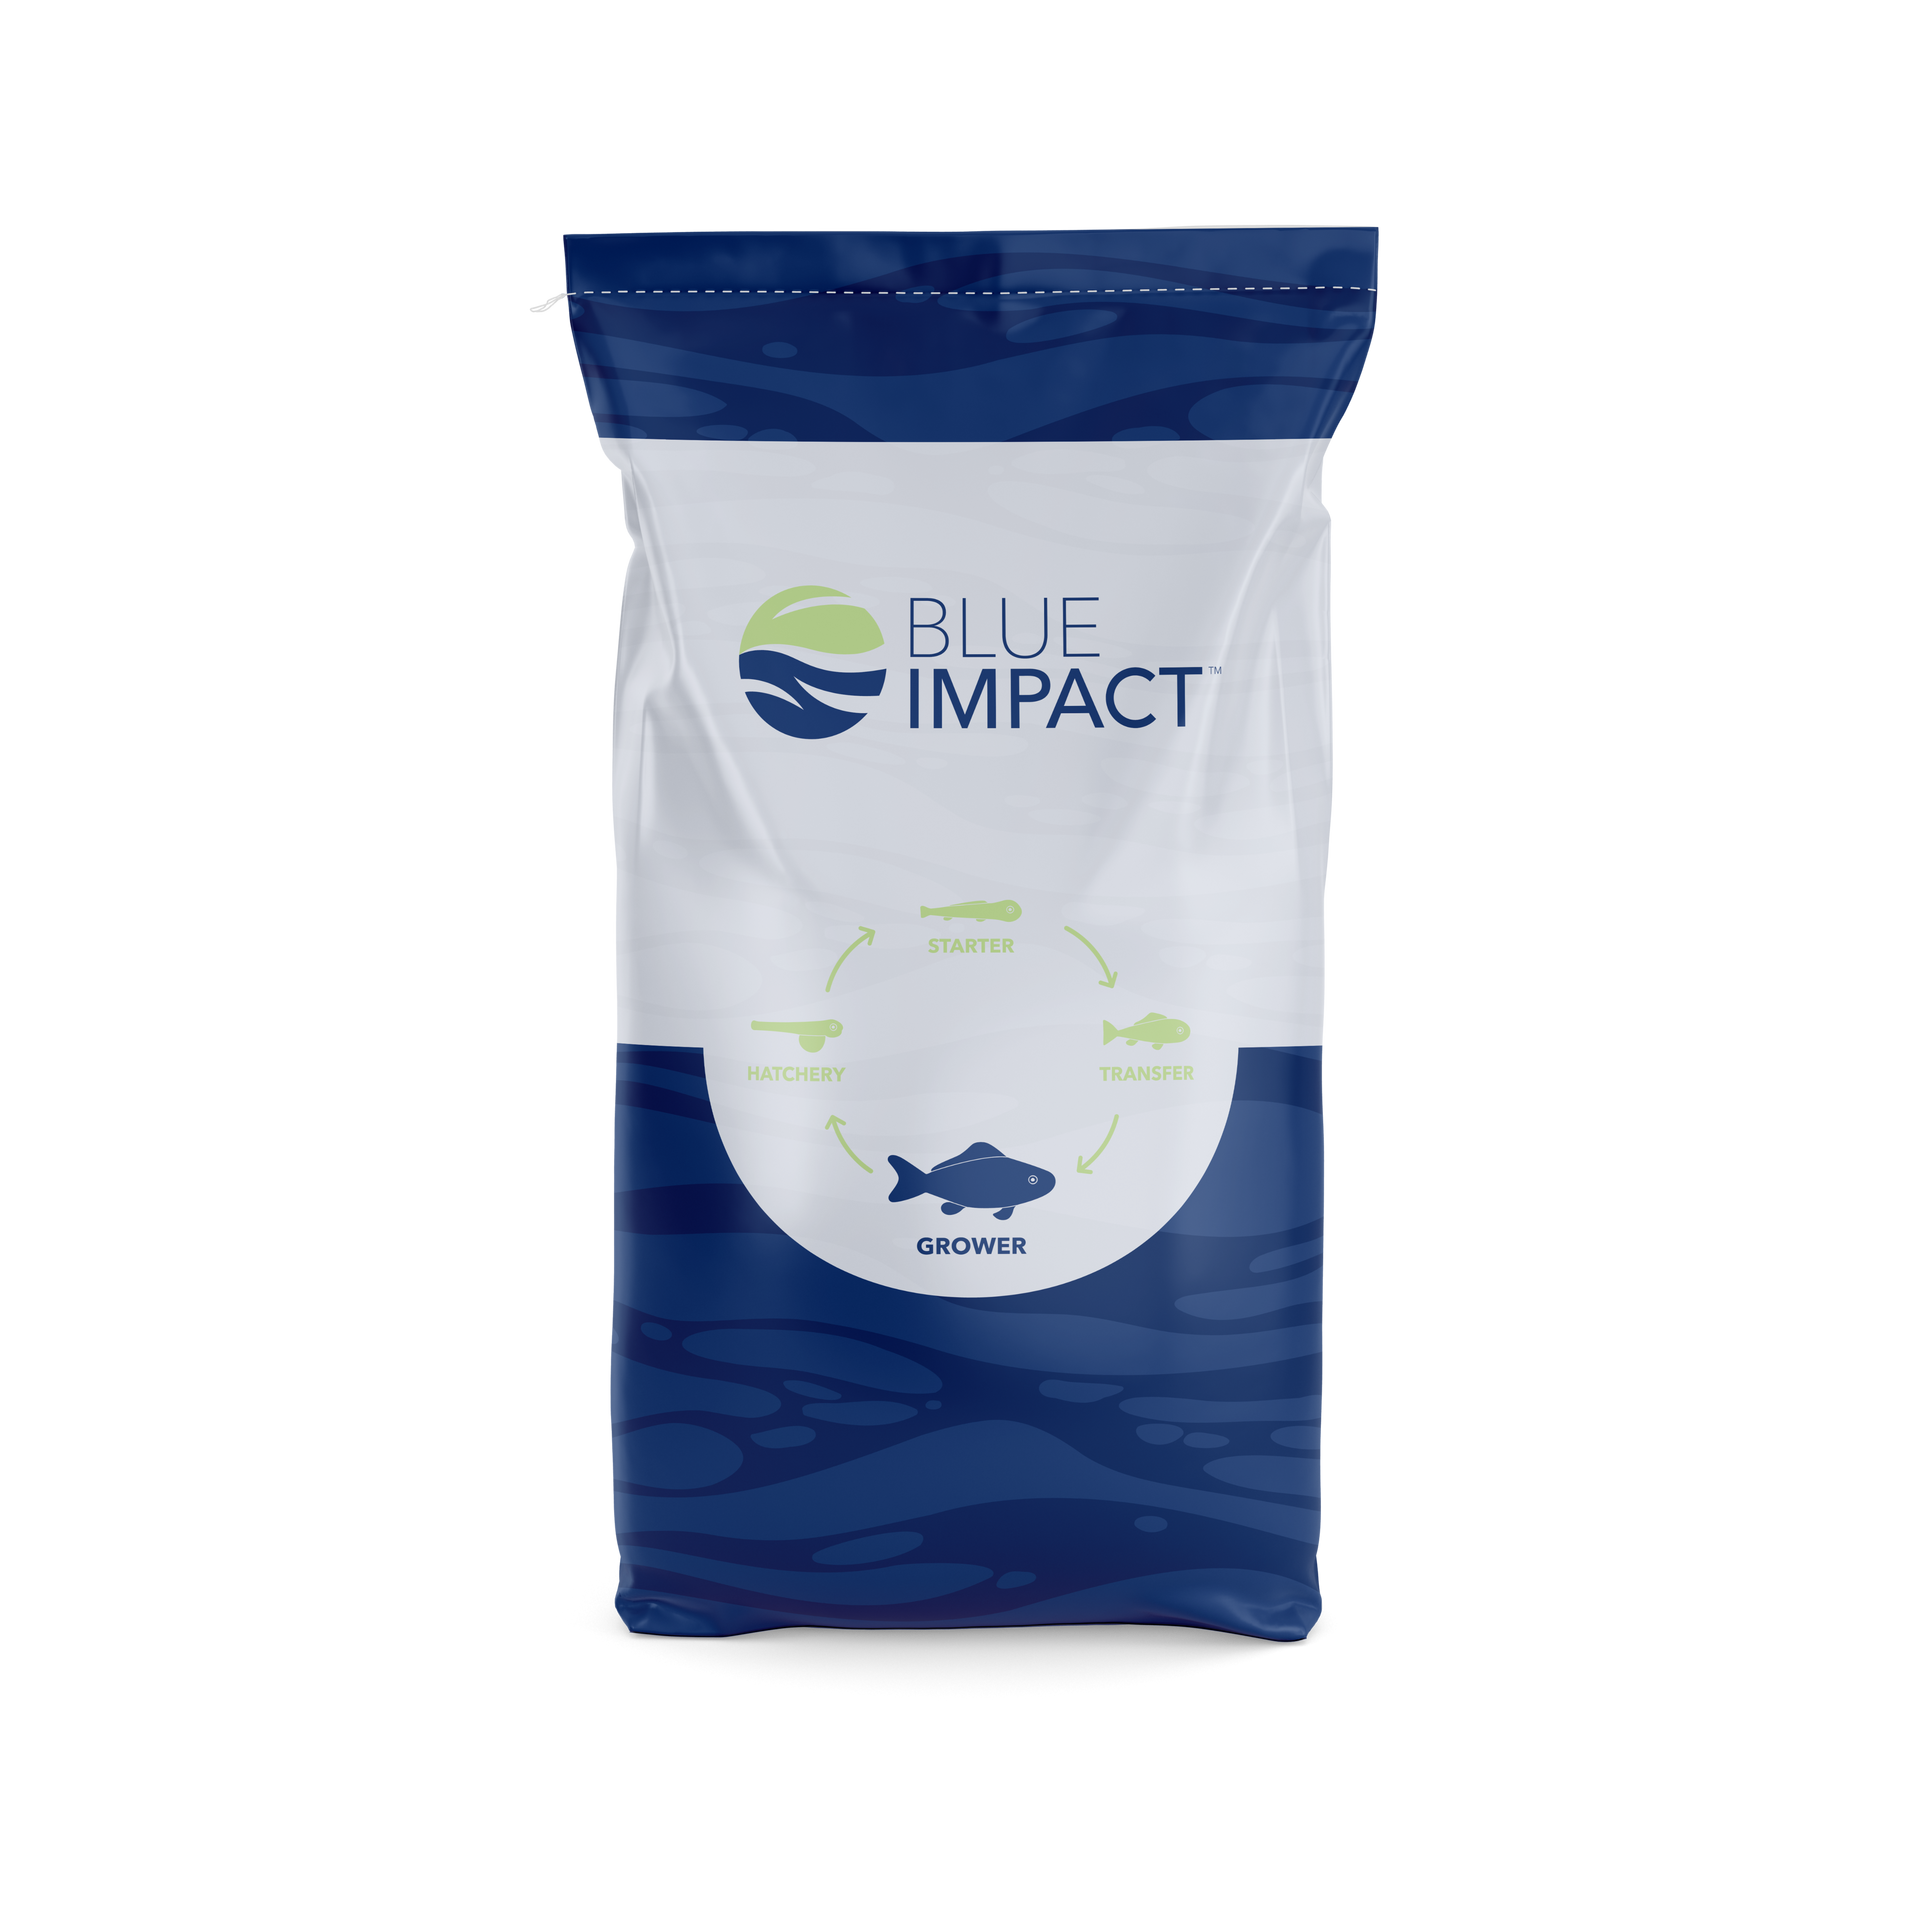 Blue Impact feed for Atlantic Salmon